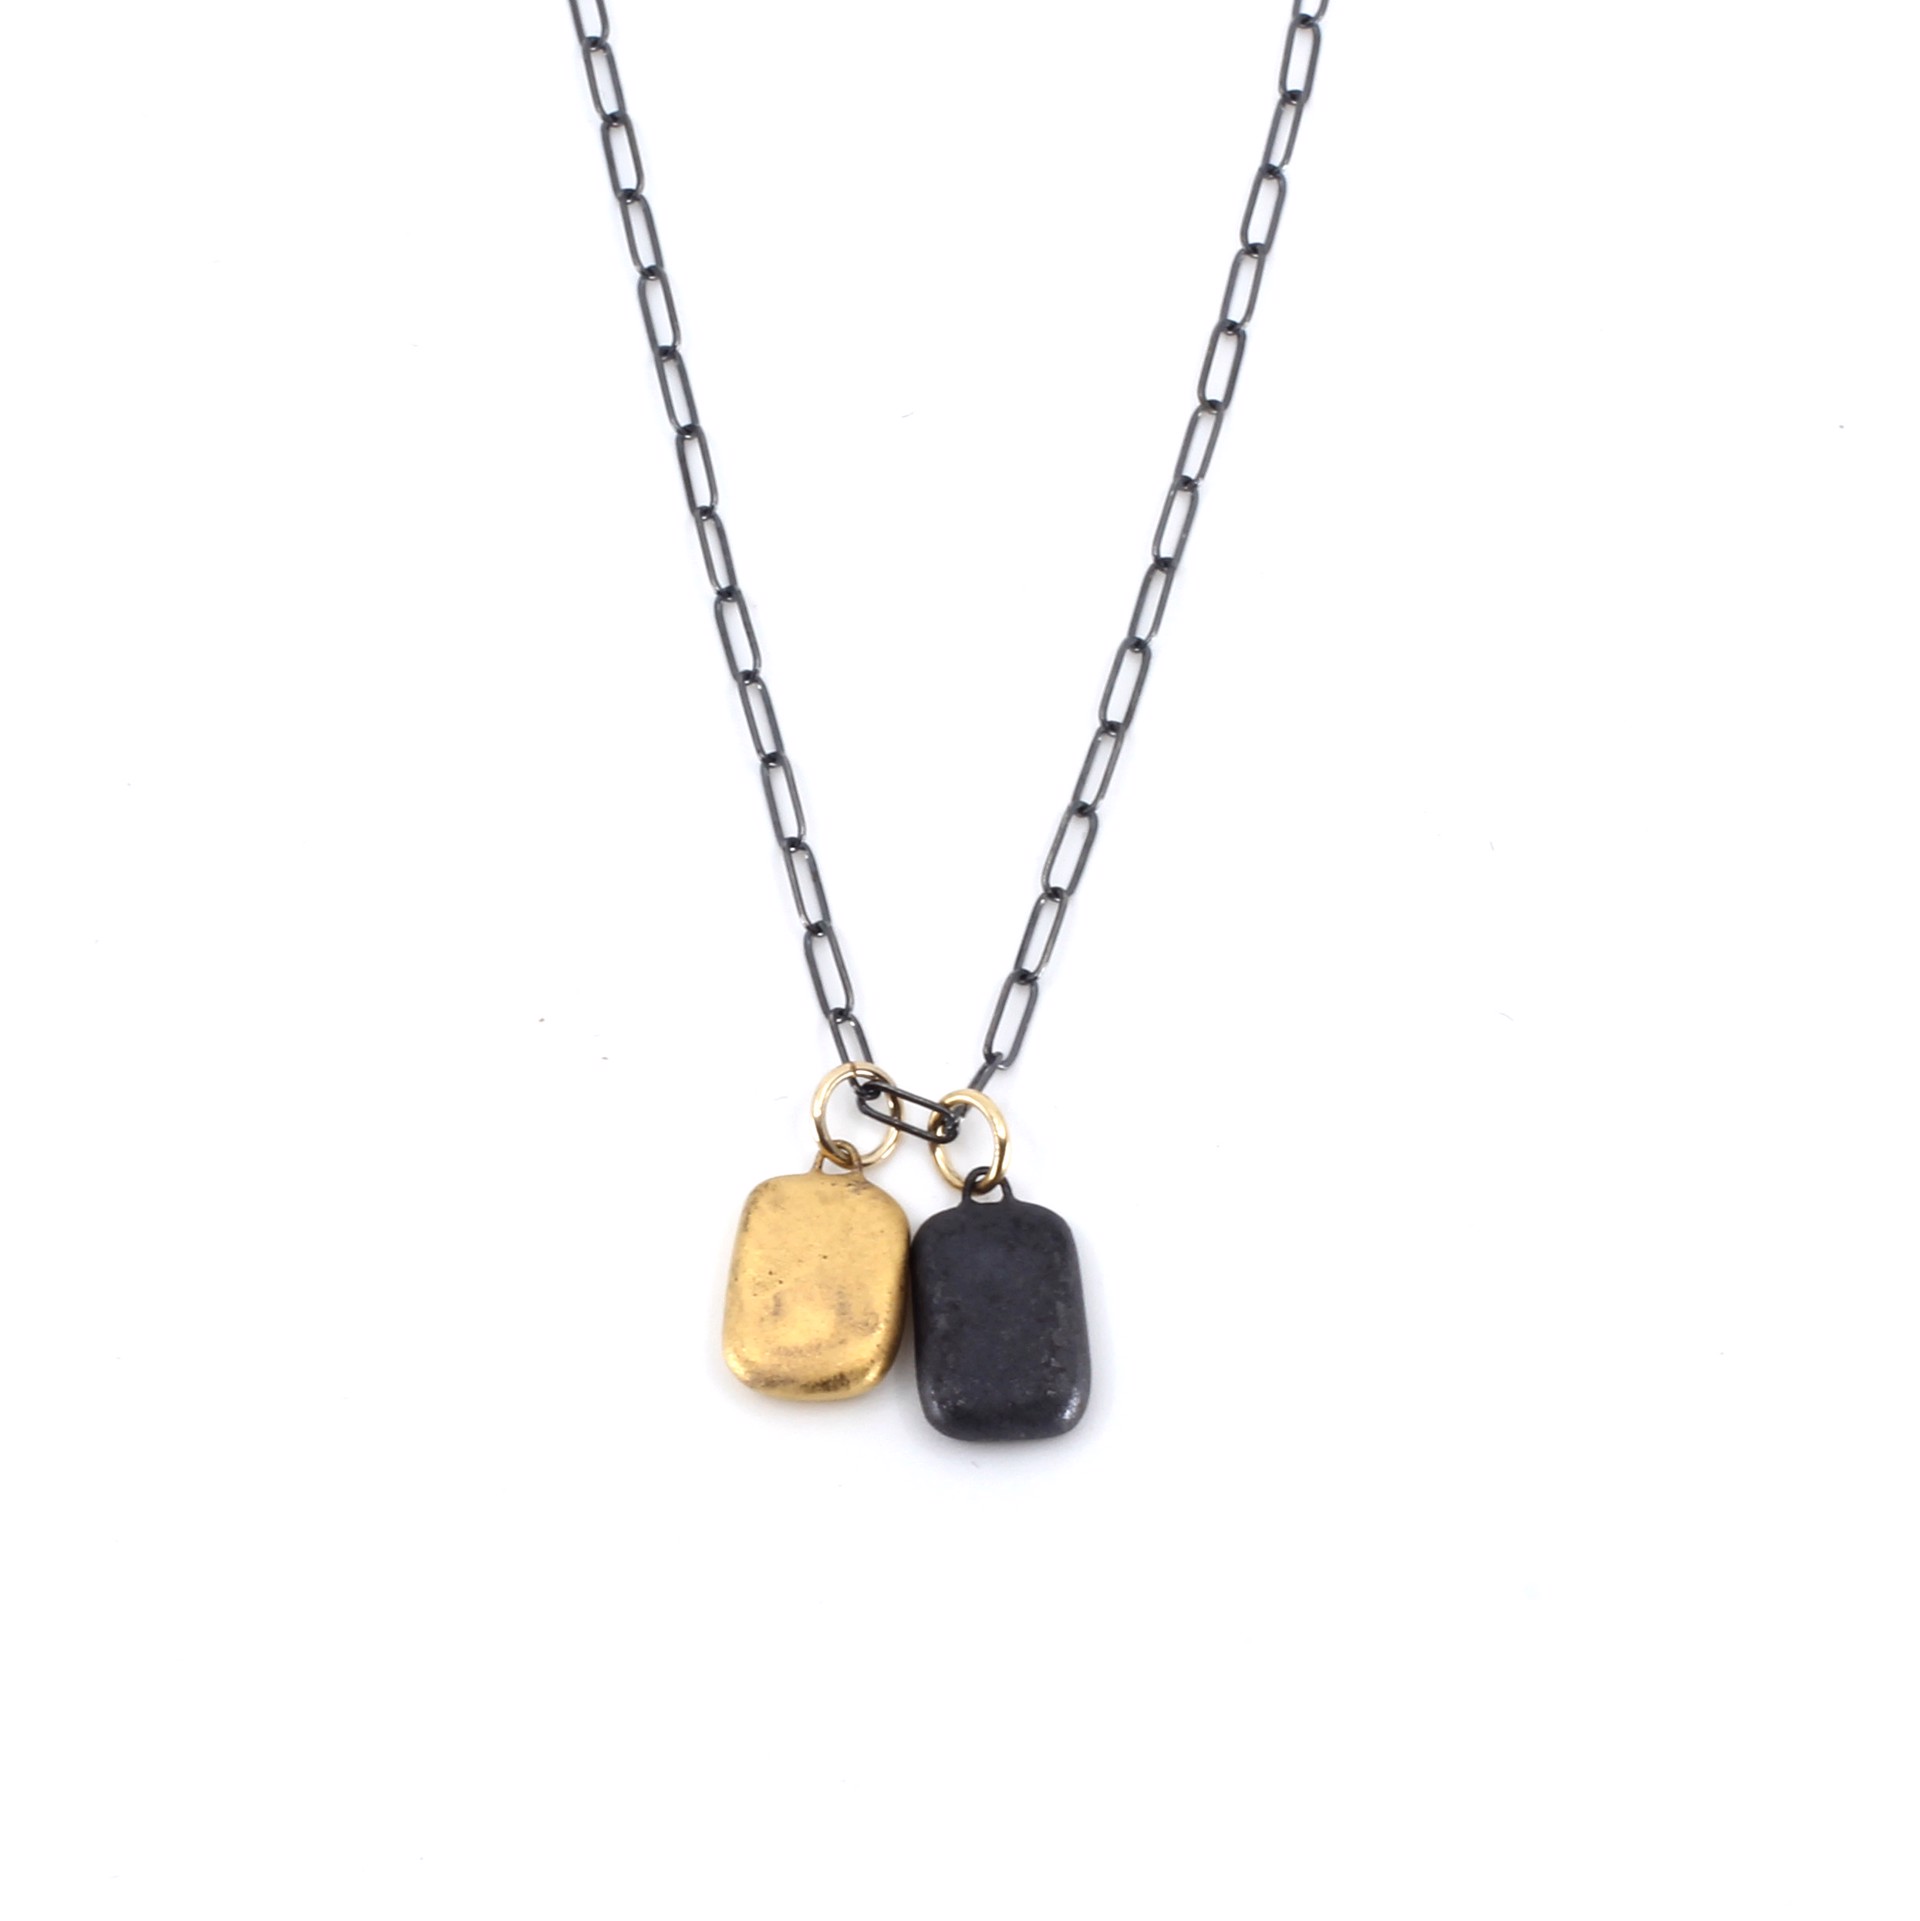 Gold + Black Charm Necklace by Jessica Wertz